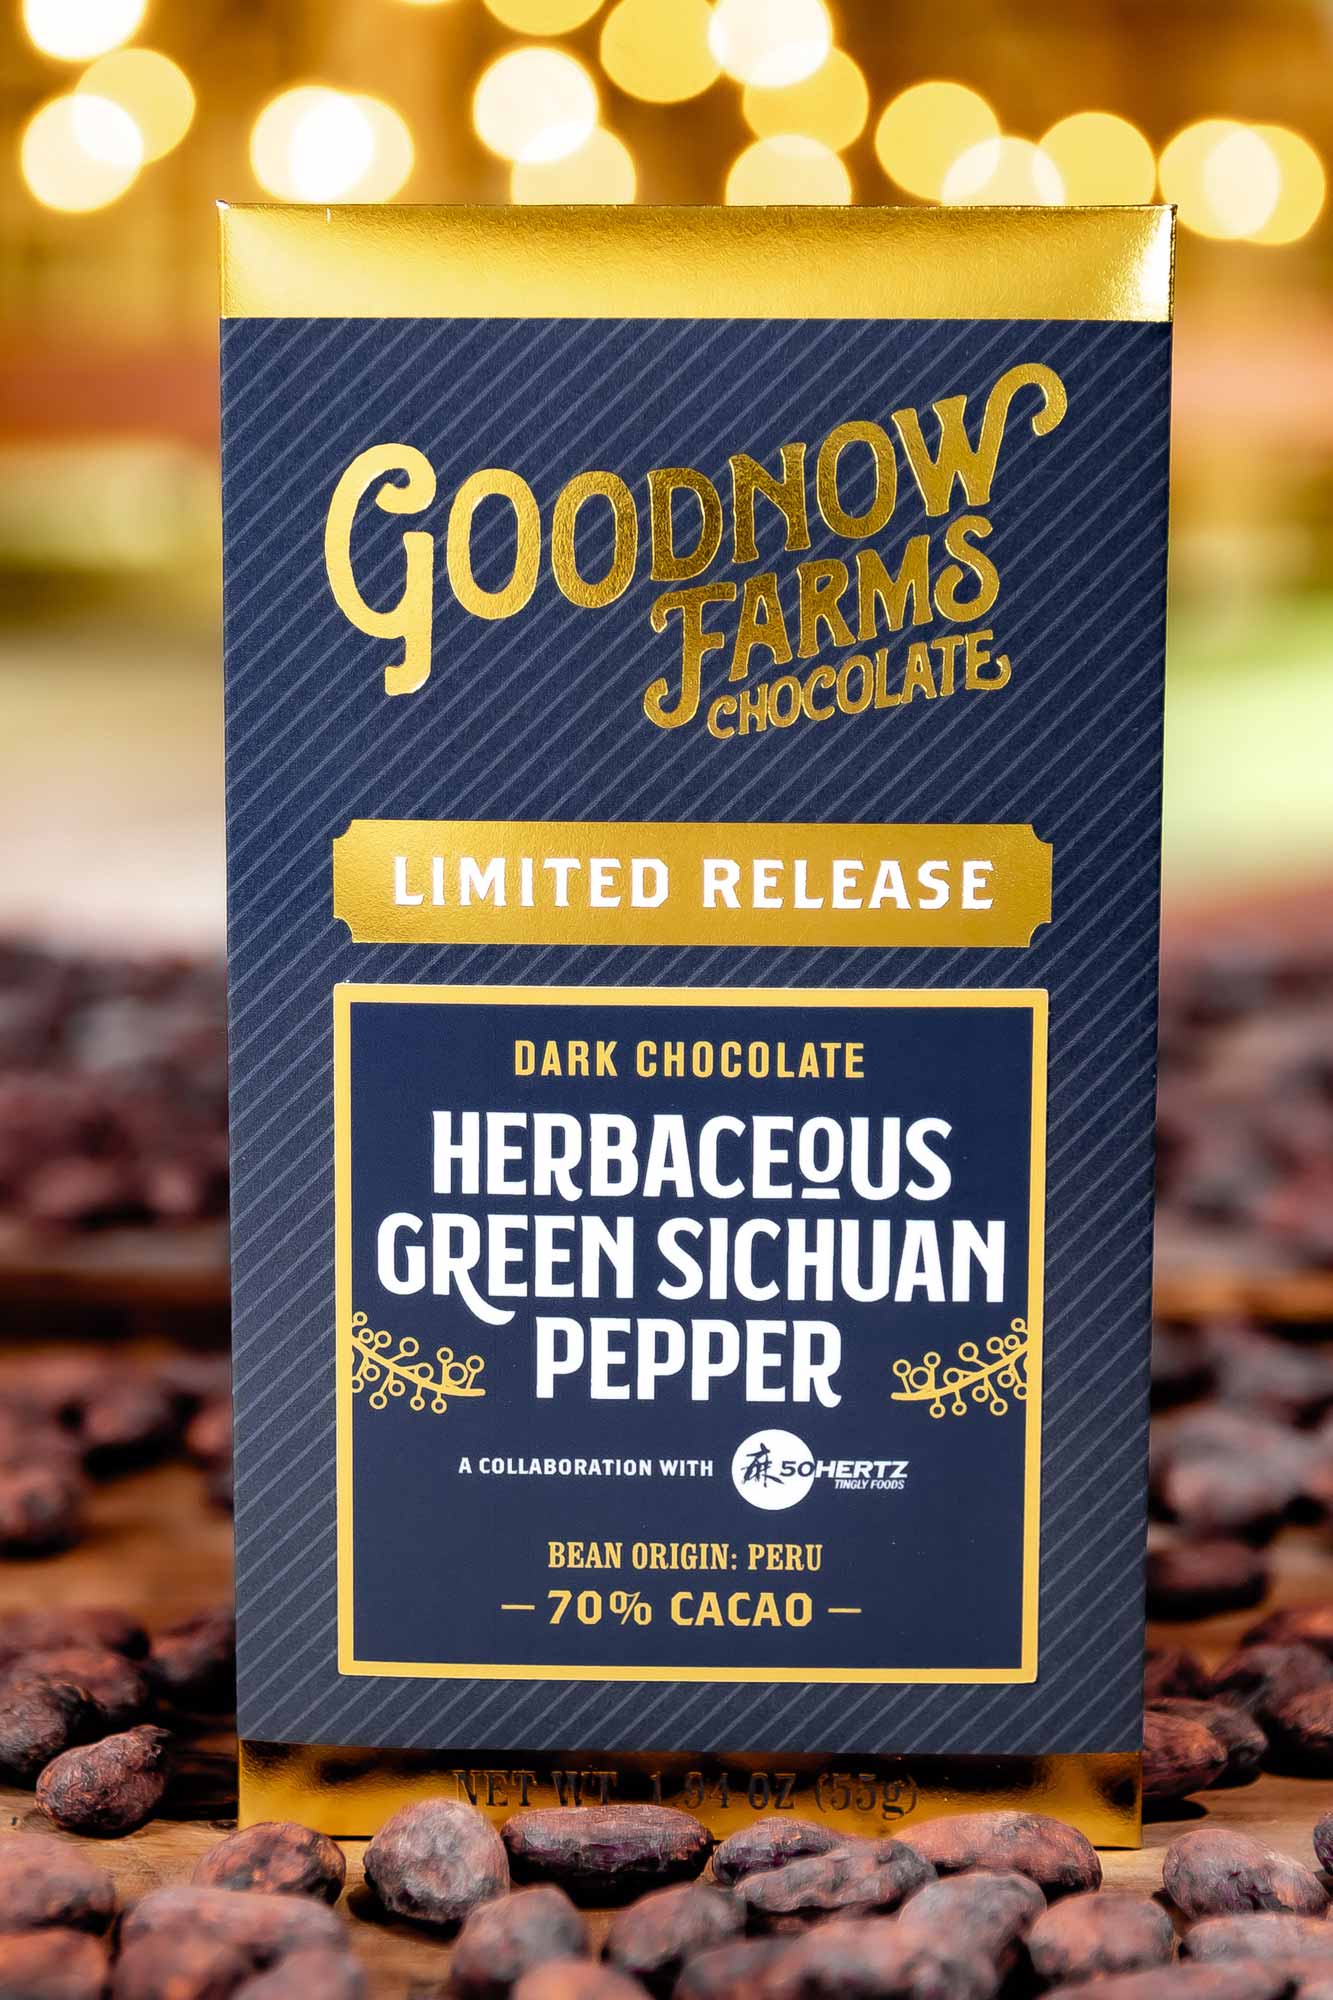 Goodnow Farms Peru 70% Dark Chocolate Bar with Herbaceous Green Sichuan Pepper